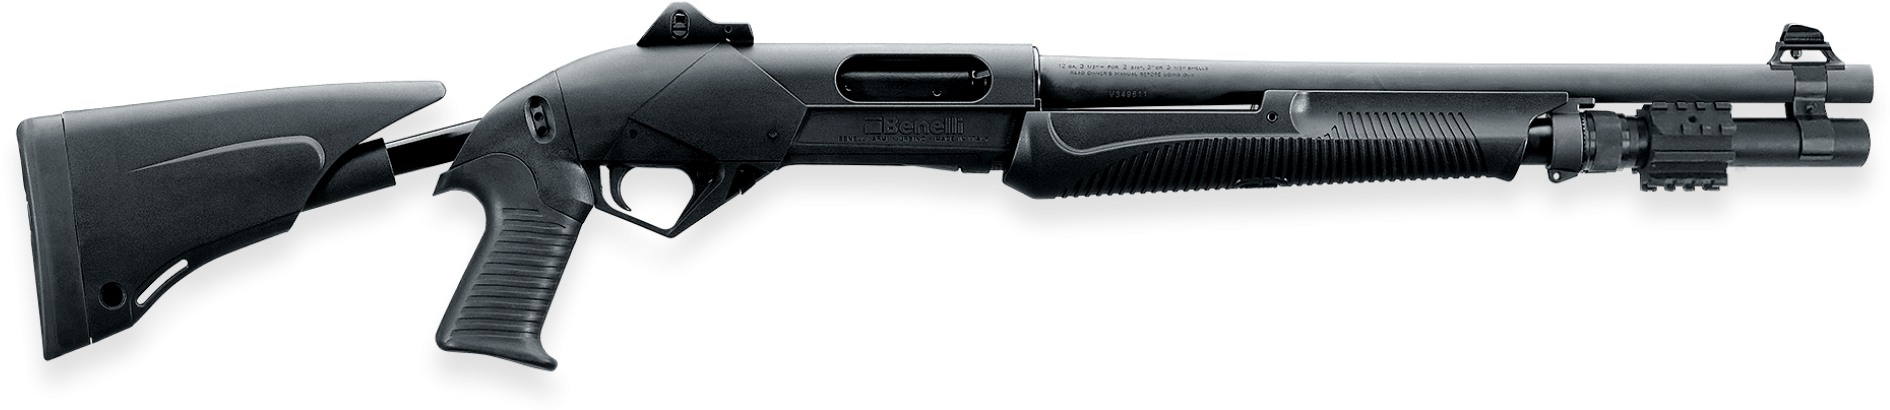 Supernova Pump-action Shotgun, Black, Pistol Grip, - Benelli Supernova Tactical Le (2000x959), Png Download